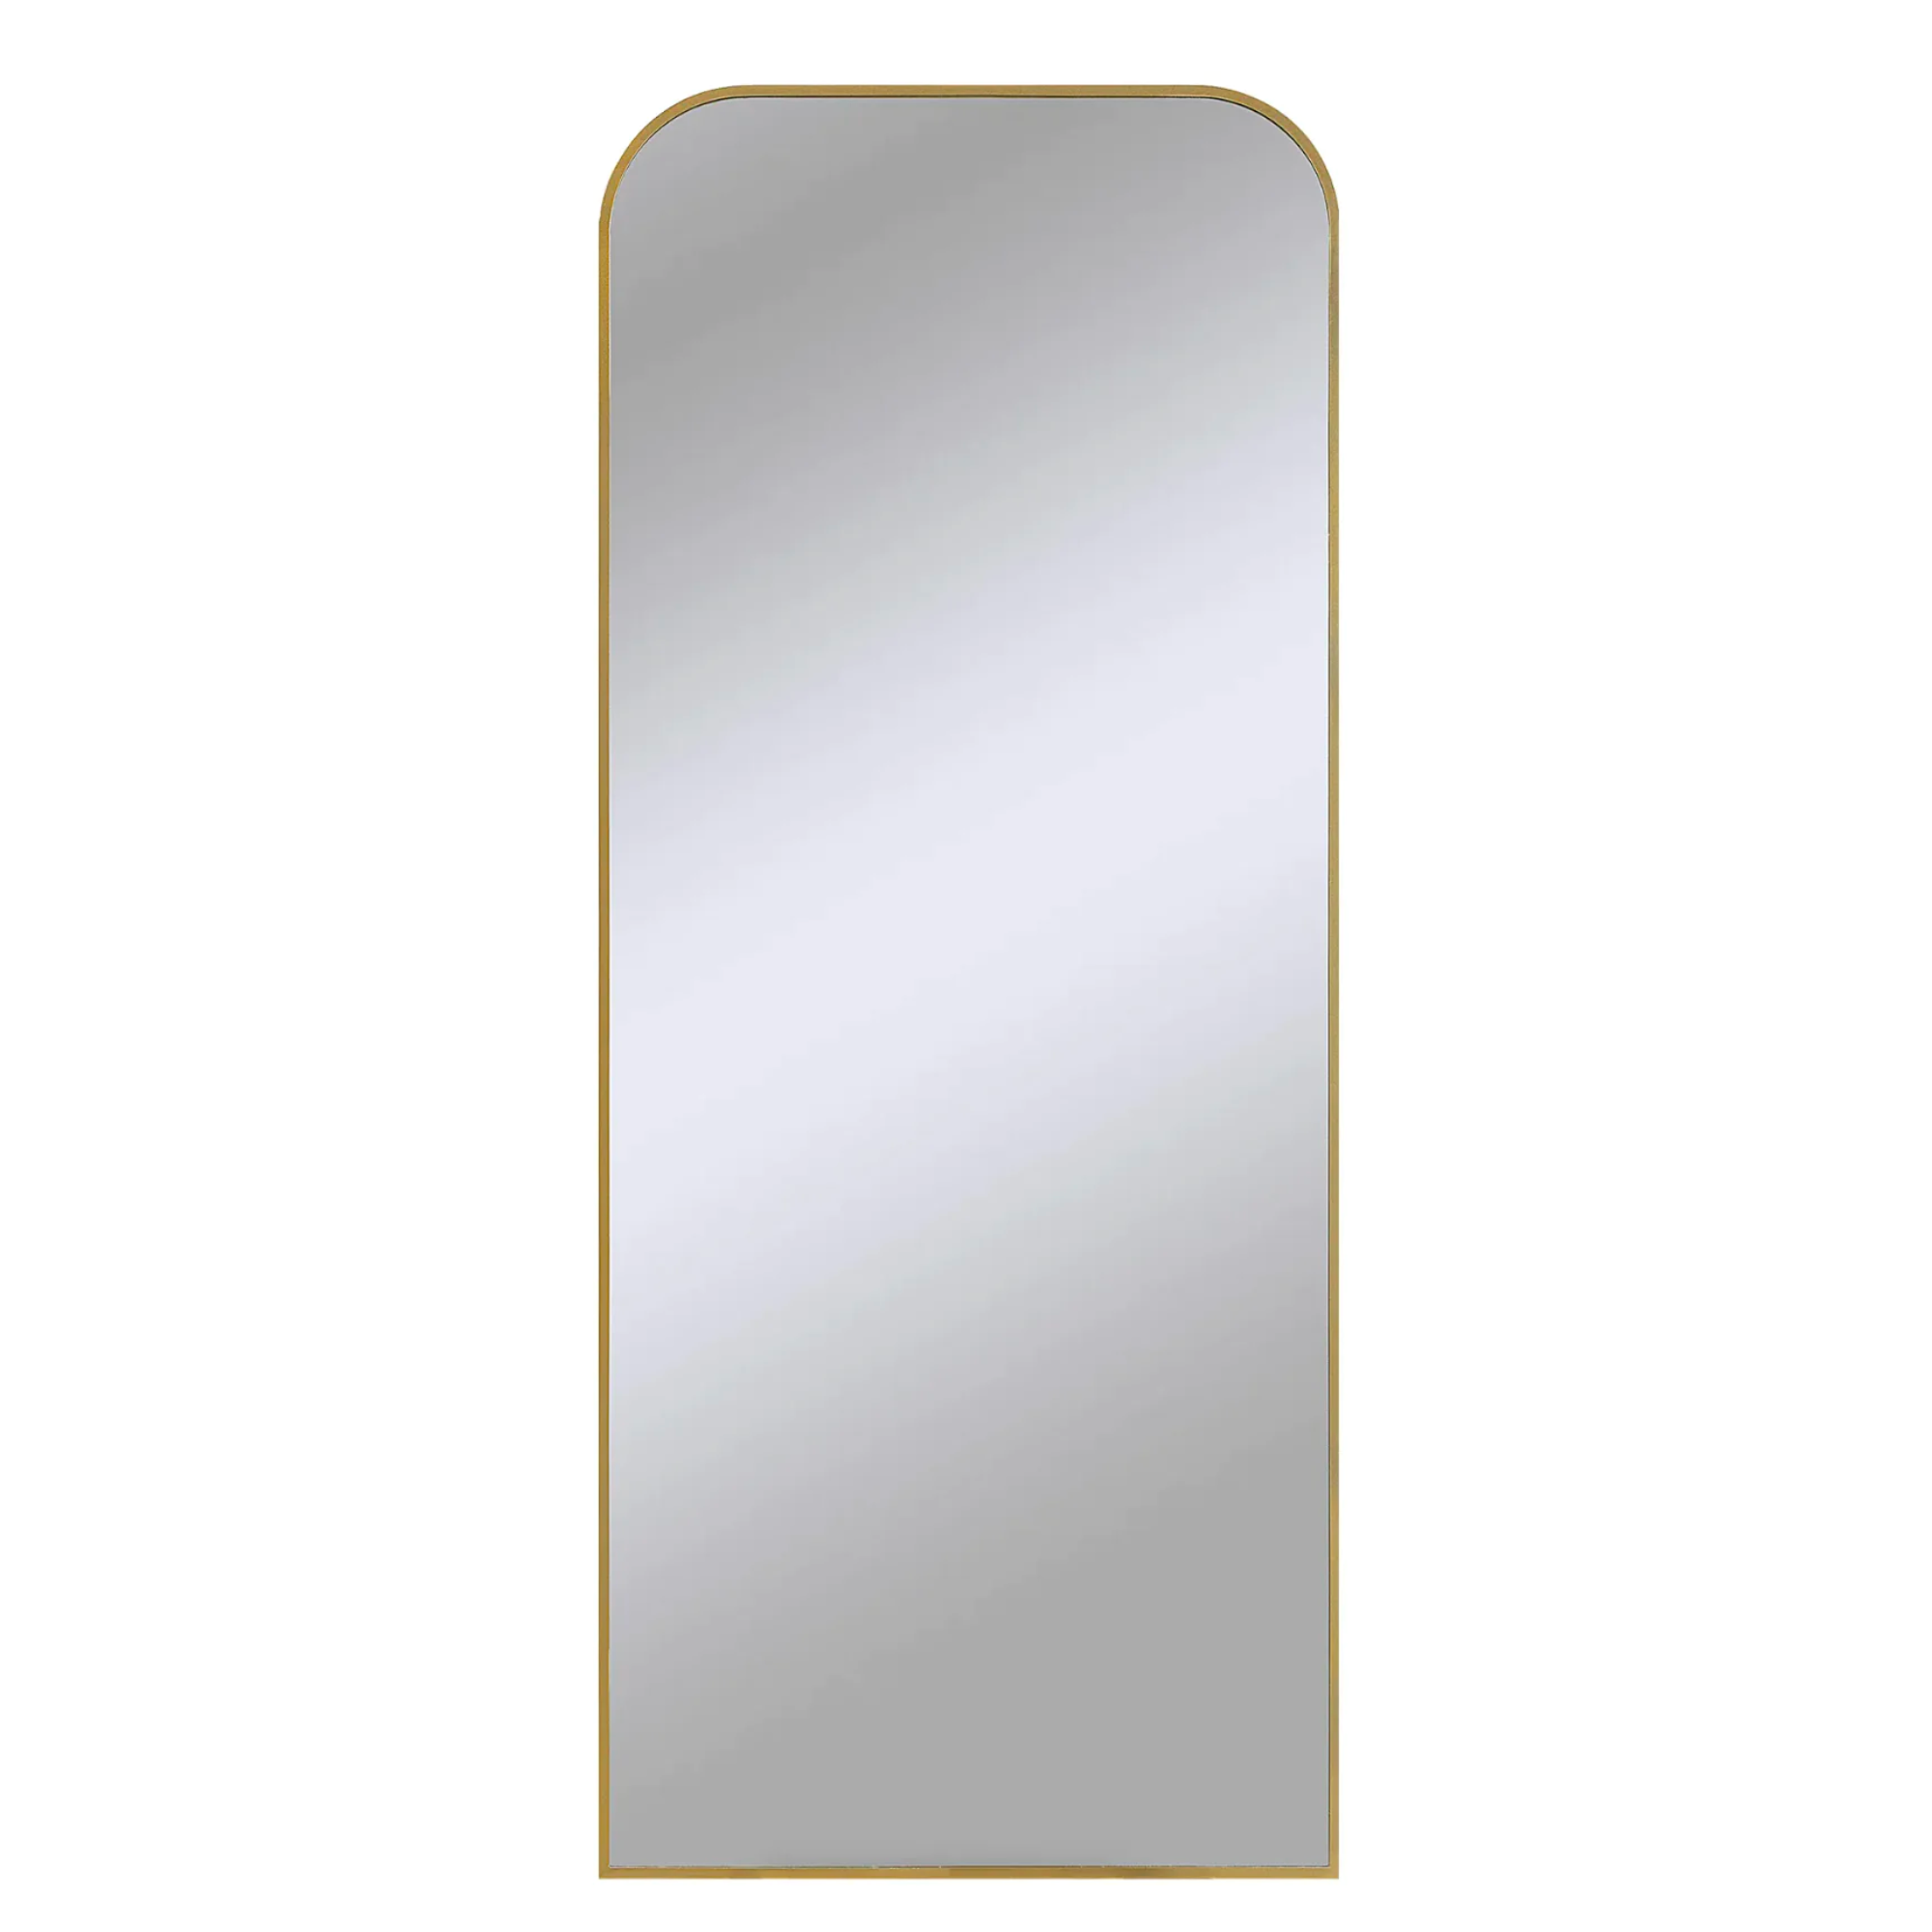 Manfred Mirror - Gold